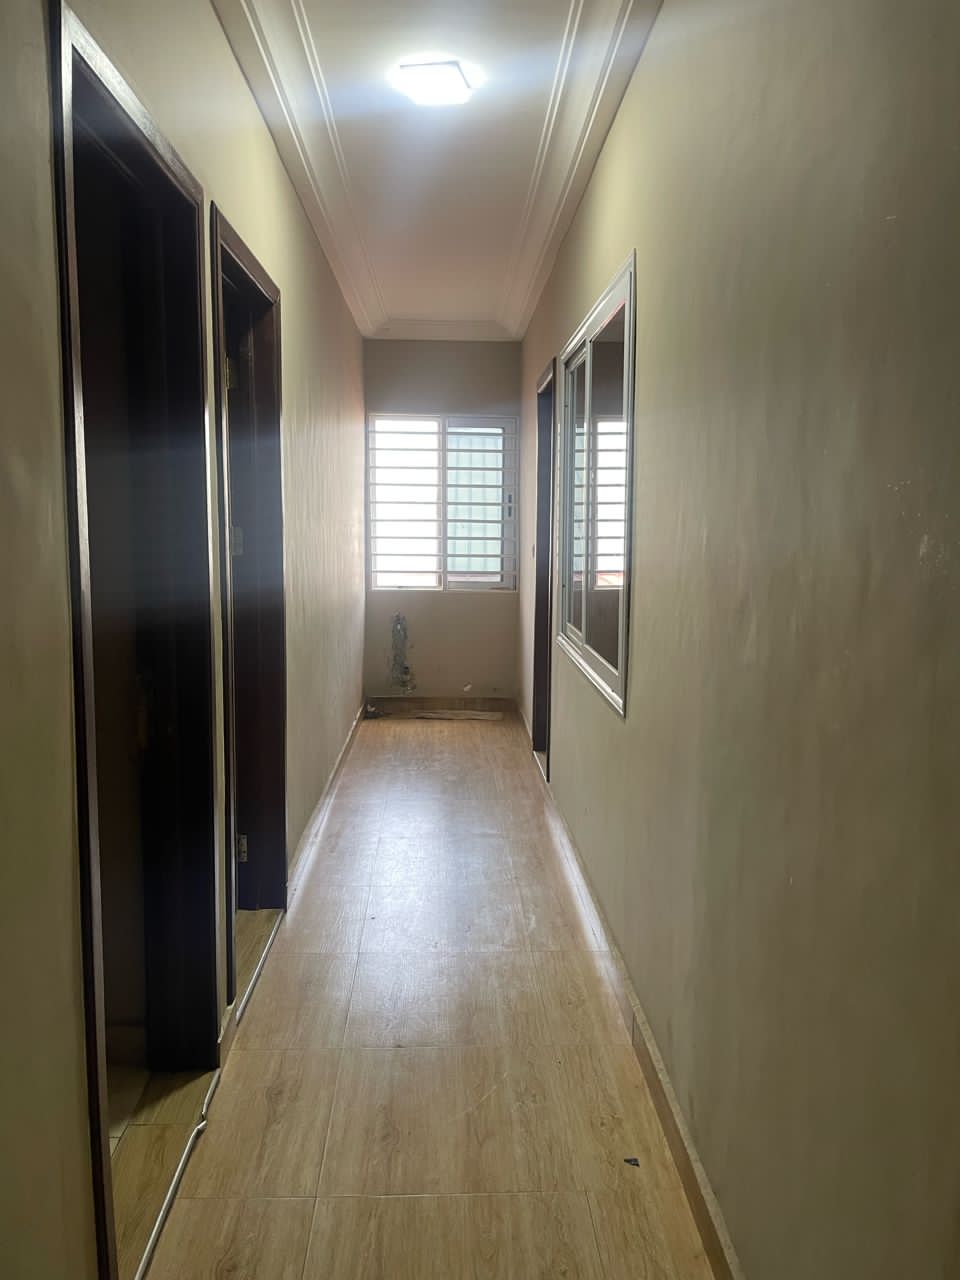 Two 2-Bedroom Apartment For Renr At Adjiringanor